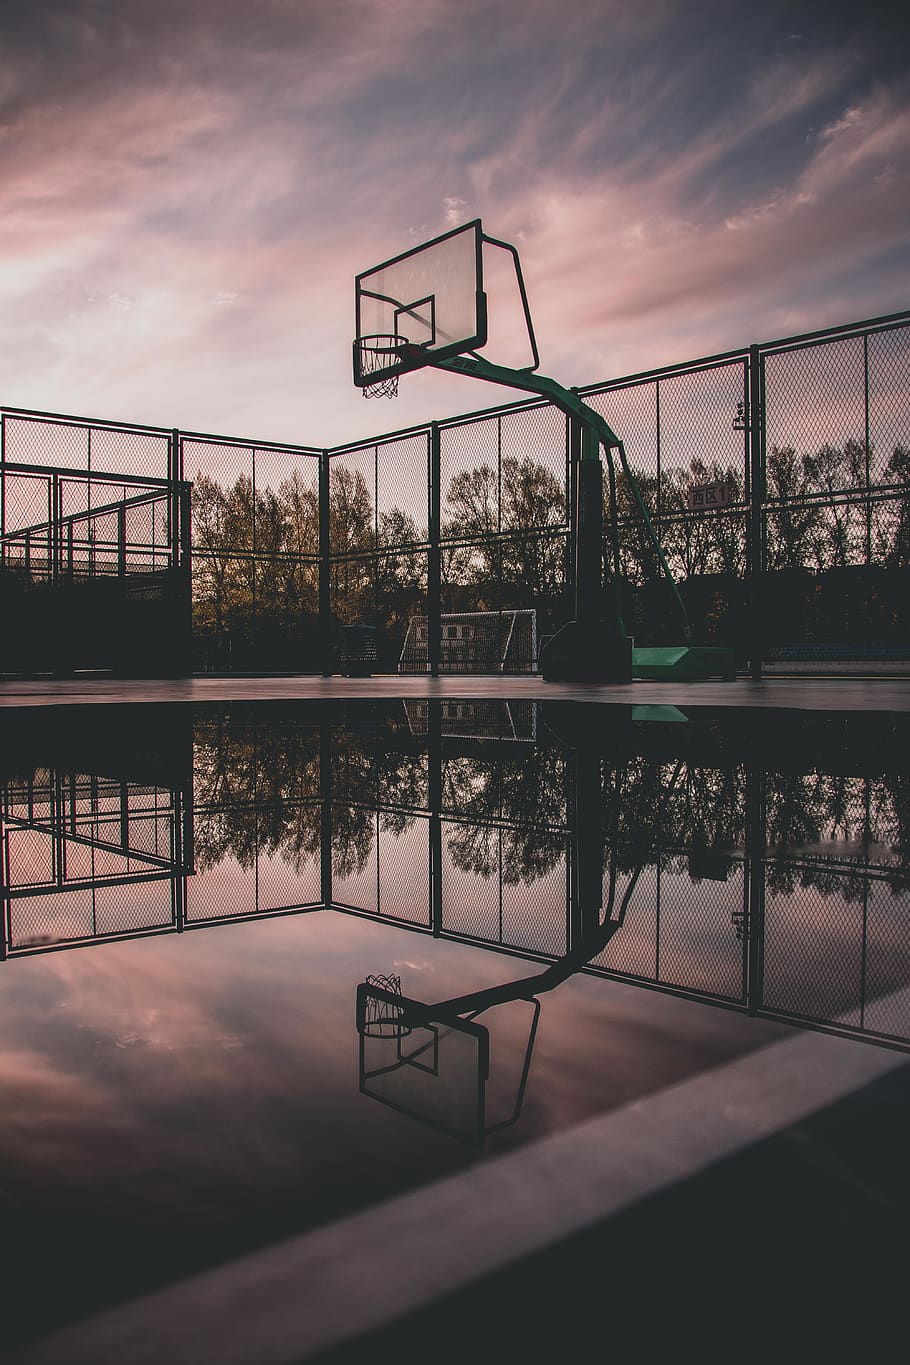 HD wallpaper: Silhouette Photo of Portable Basketball, architecture, basketball basket